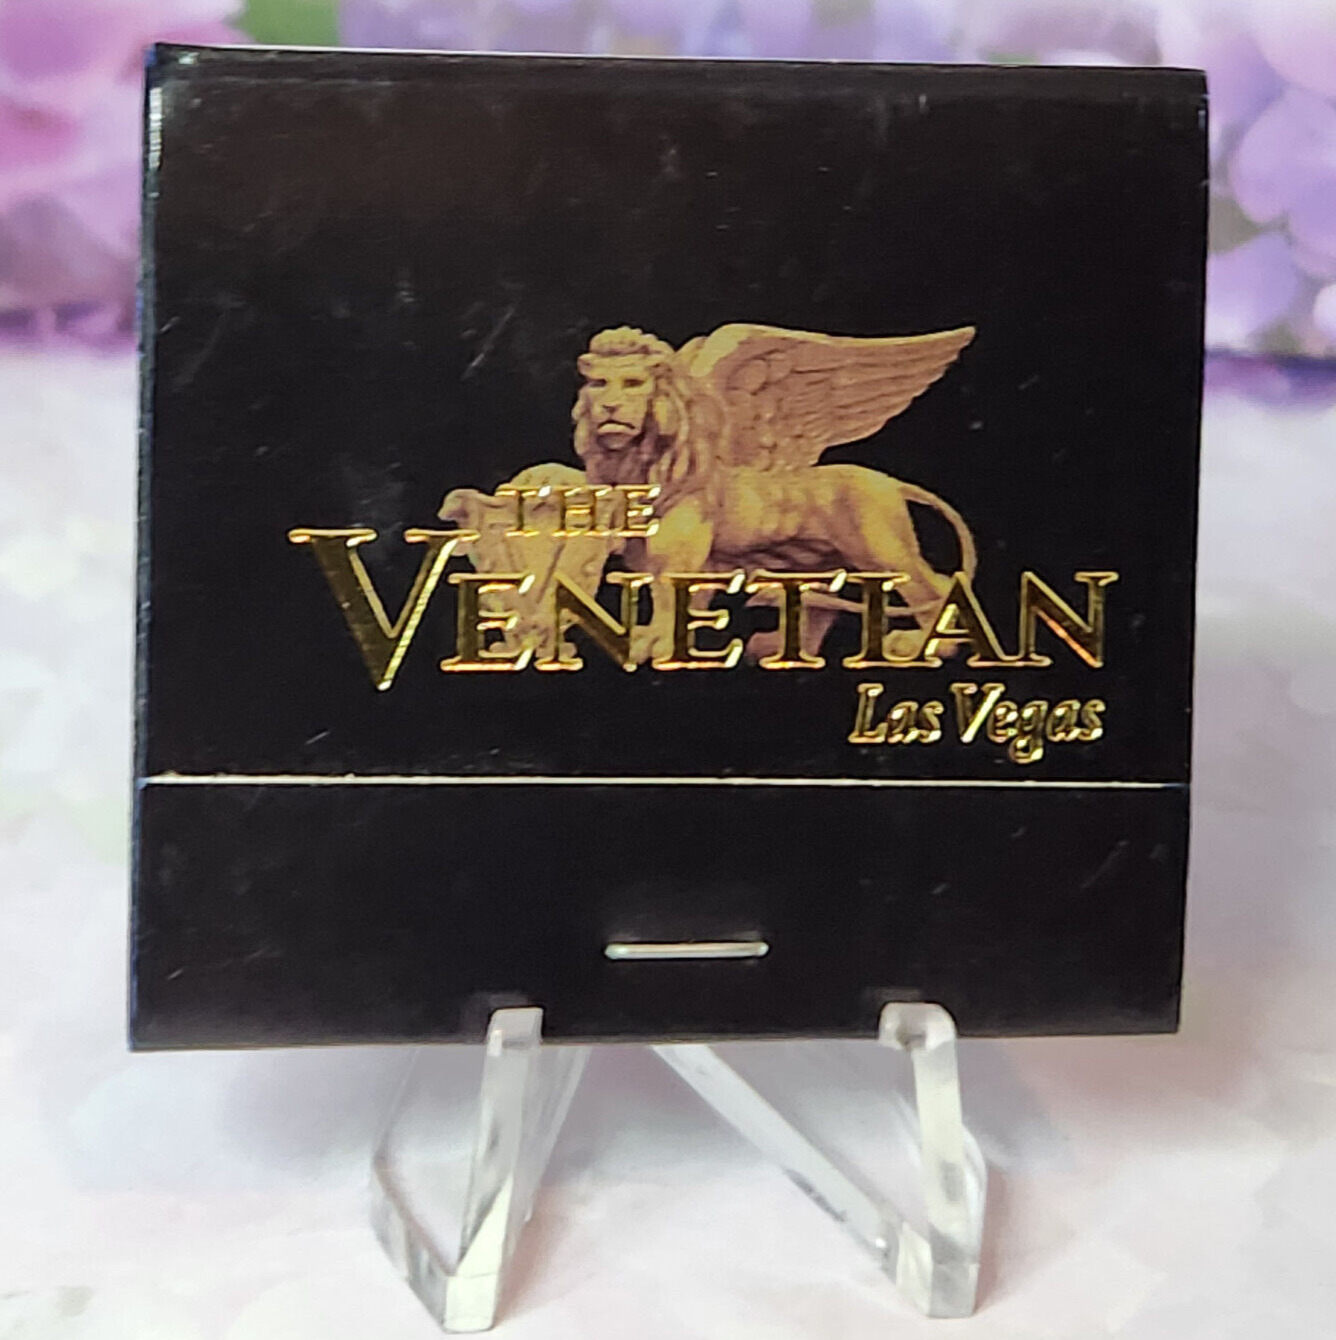 Las Vegas Venetian Match Box Complete-Vintage Matches Memorabilia-refurbished